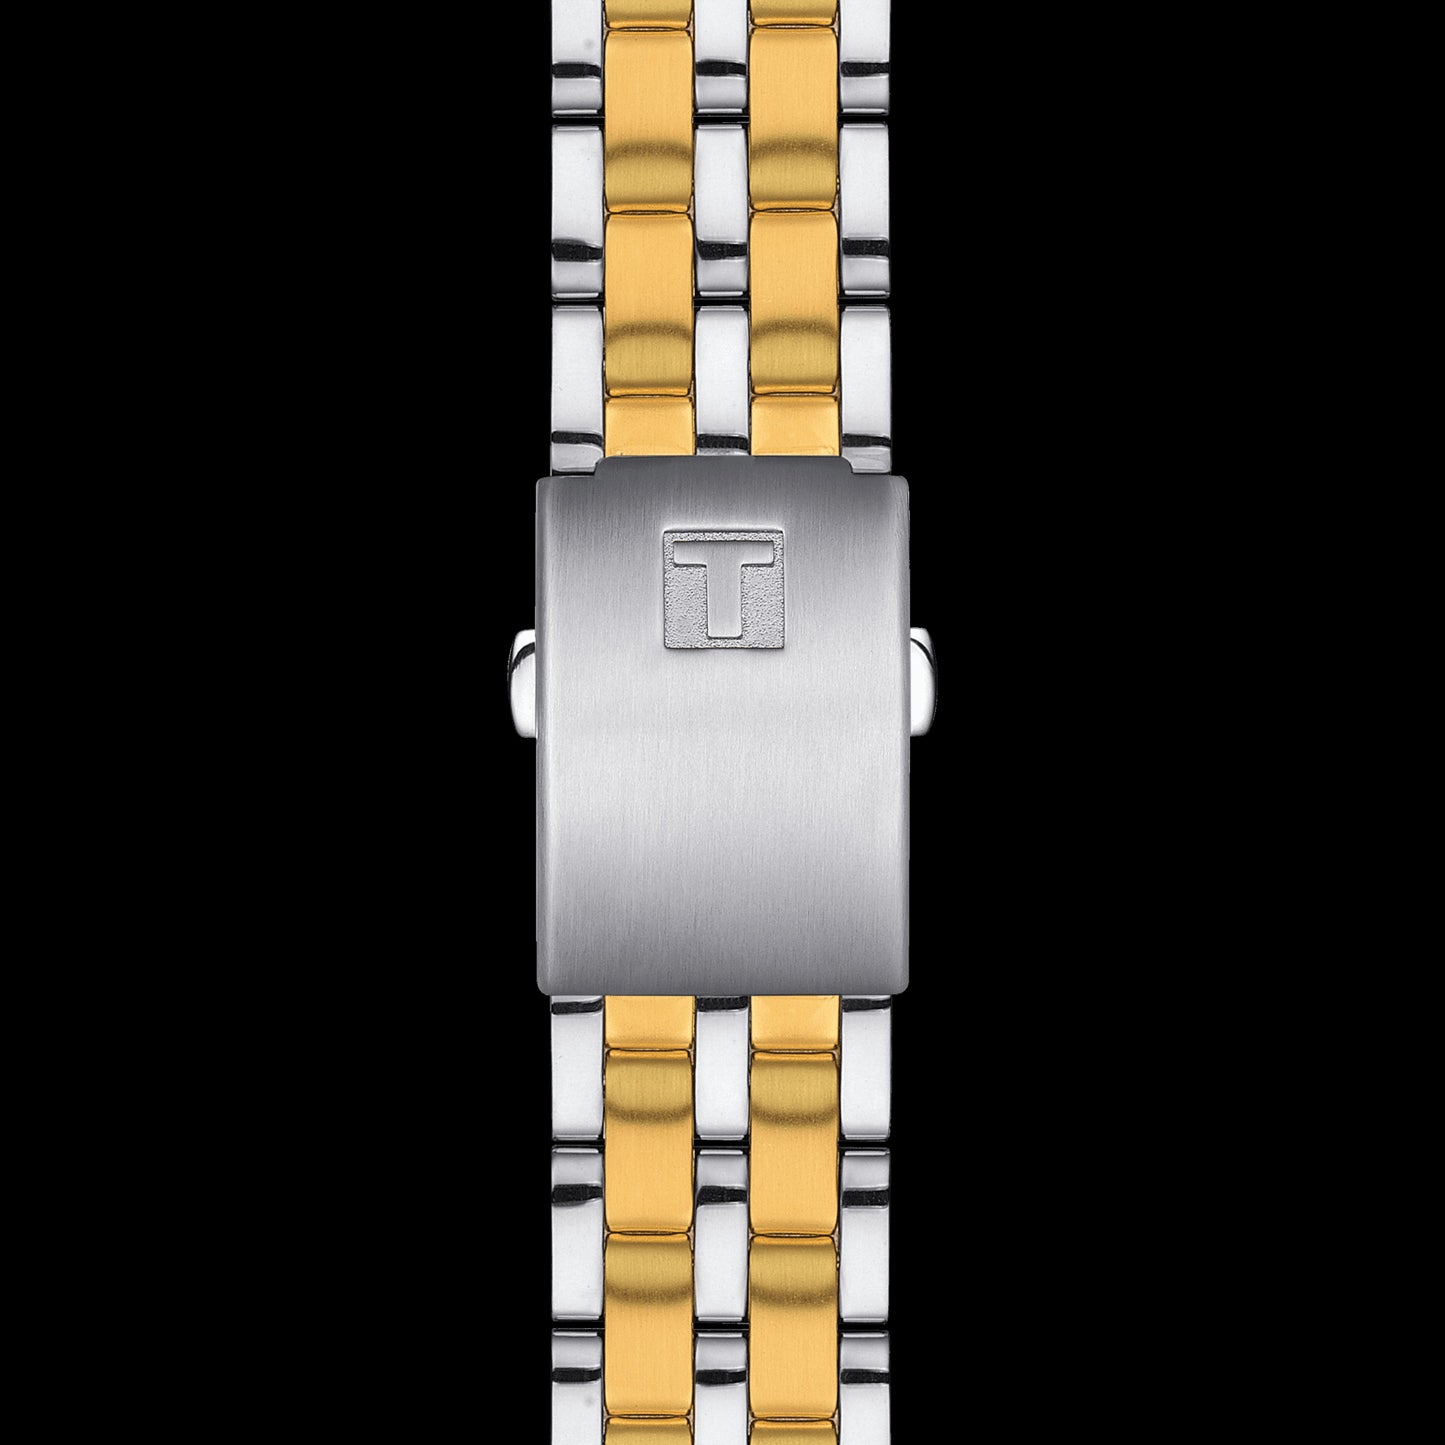 Tissot Swiss Made T-Classic Dream 2 Tone Gold Plated Men's Watch T0334102201101